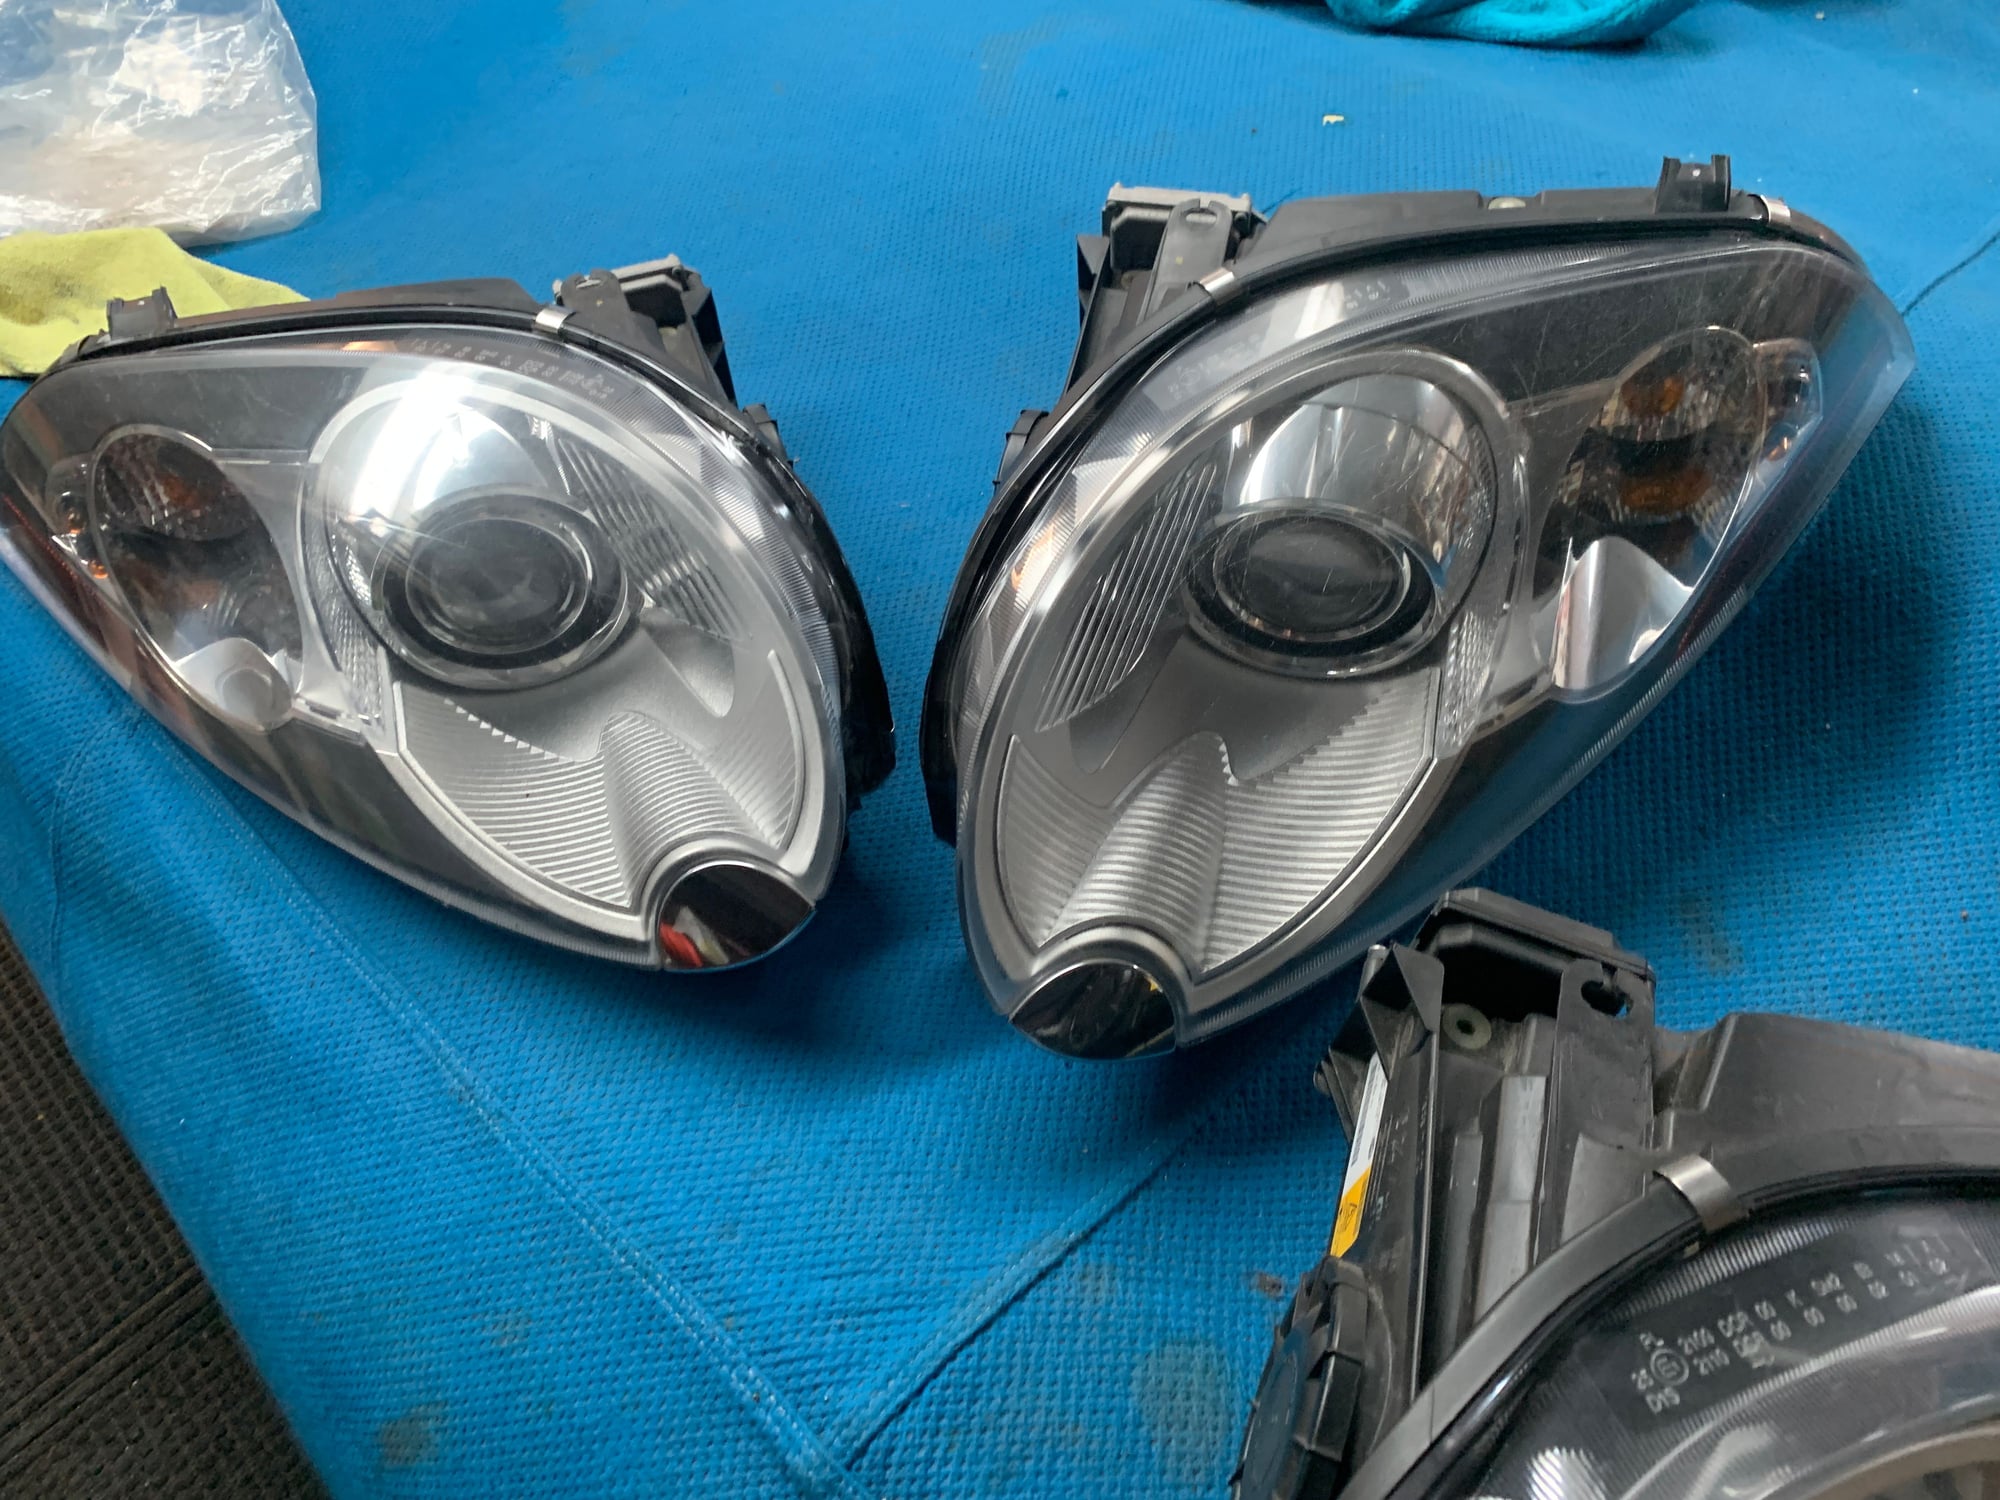 Lights - headlight assys - Used - 2007 to 2009 Jaguar XKR - Severna Park, MD 21146, United States